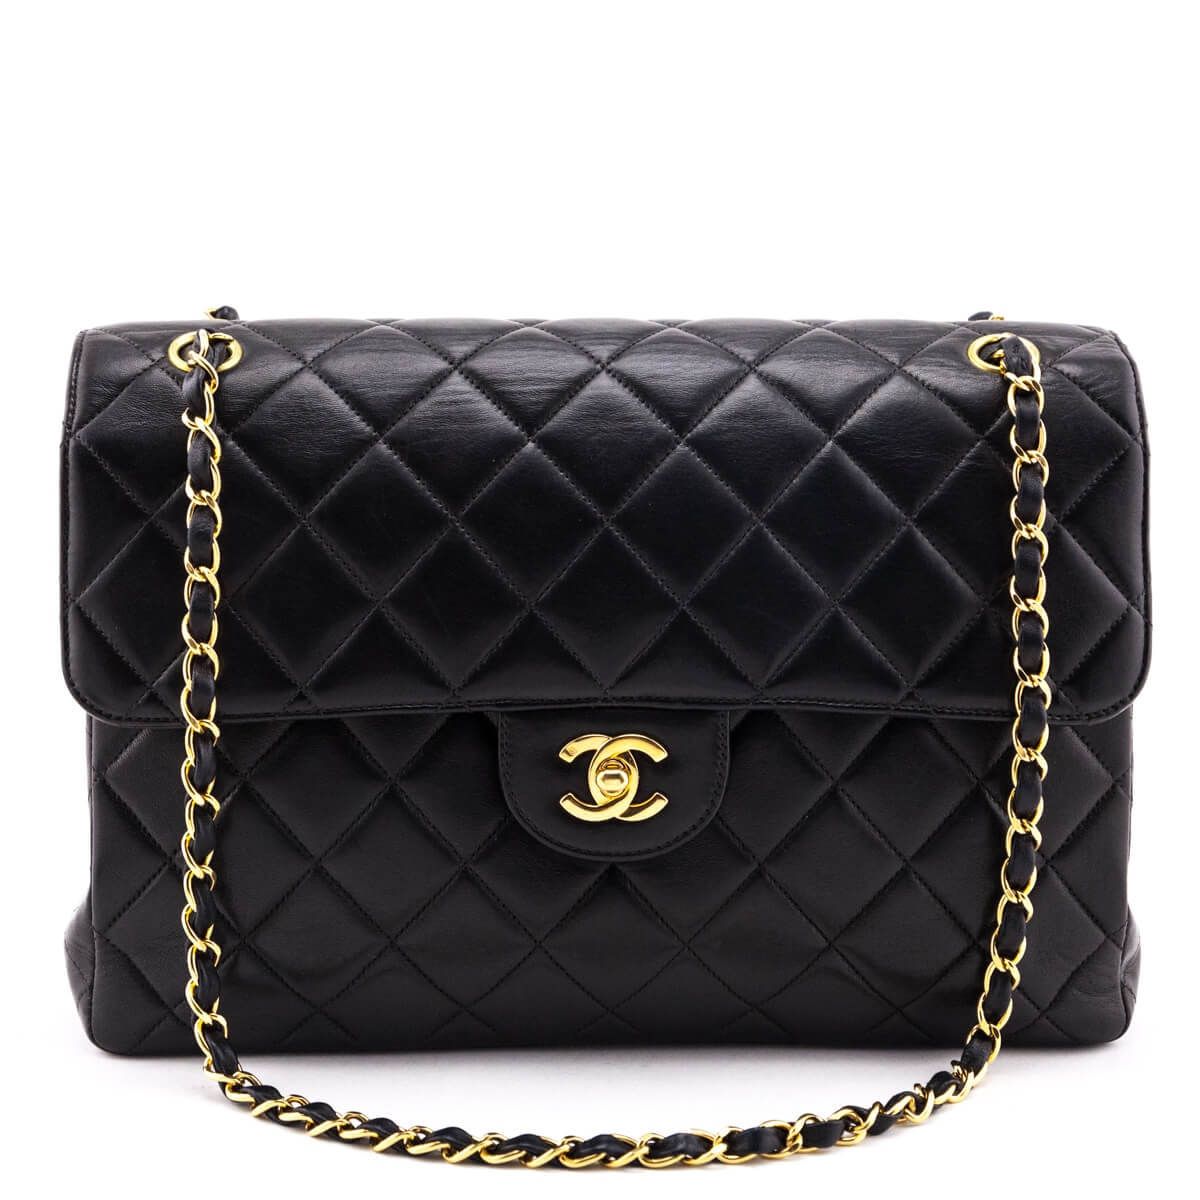 Chanel Vintage CC Flap Shoulder Bag Sự Lưu Giữ Vẻ Đ